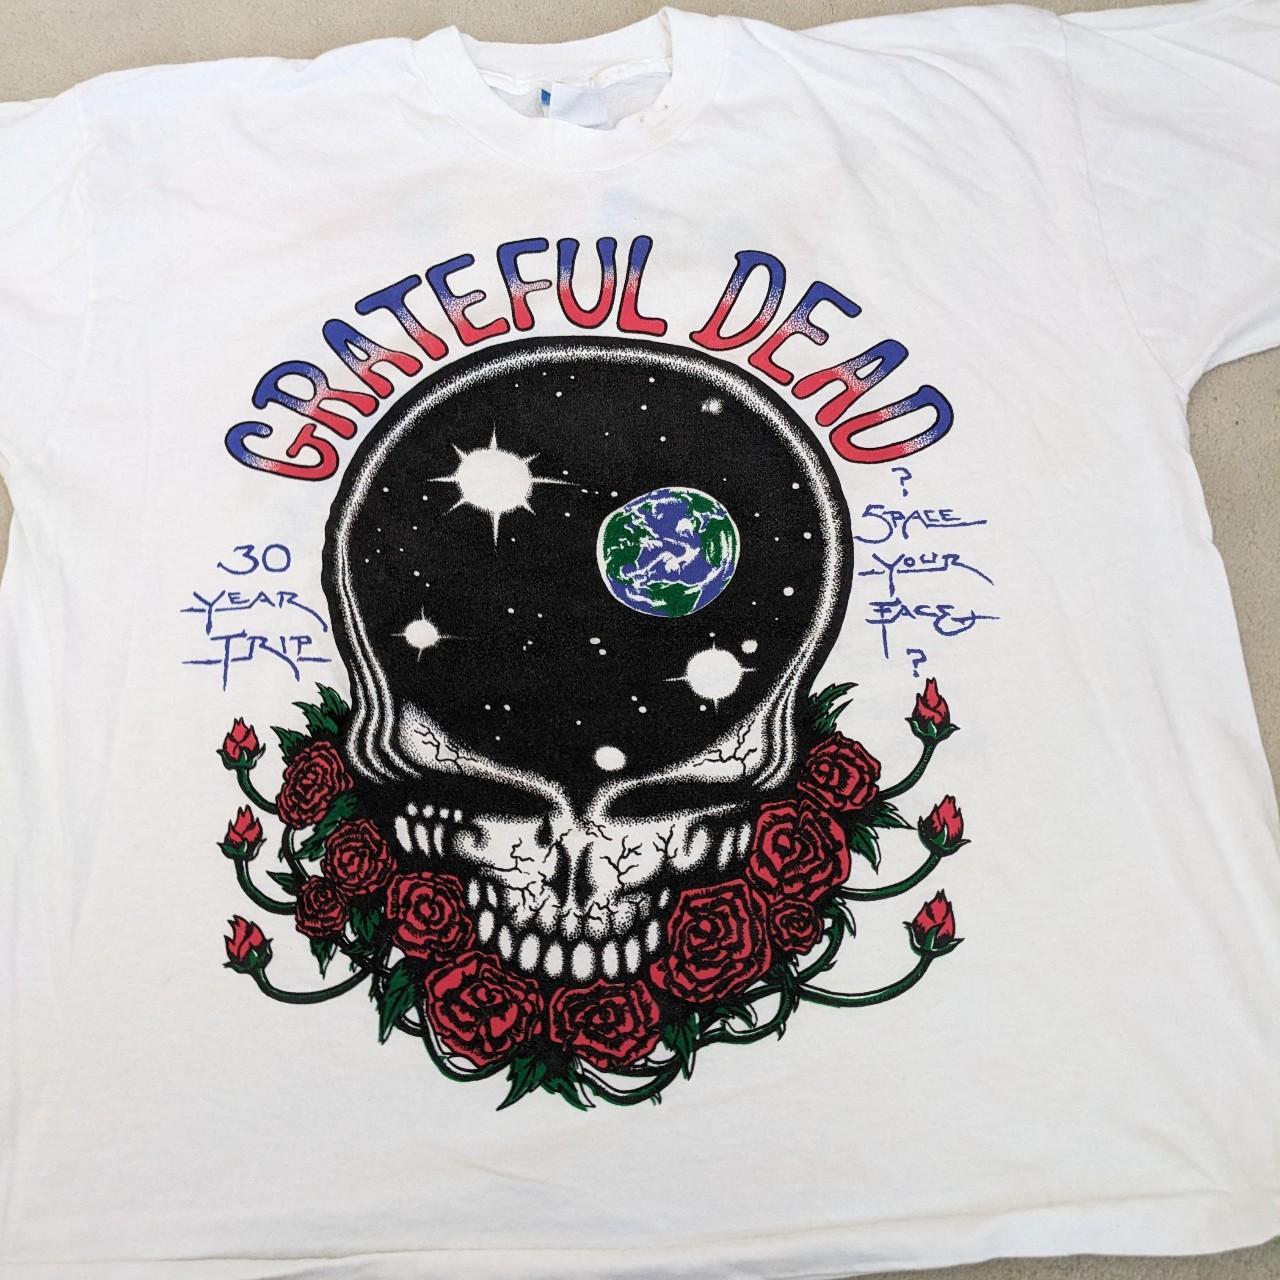 My vintage dead t shirt collection : r/gratefuldead